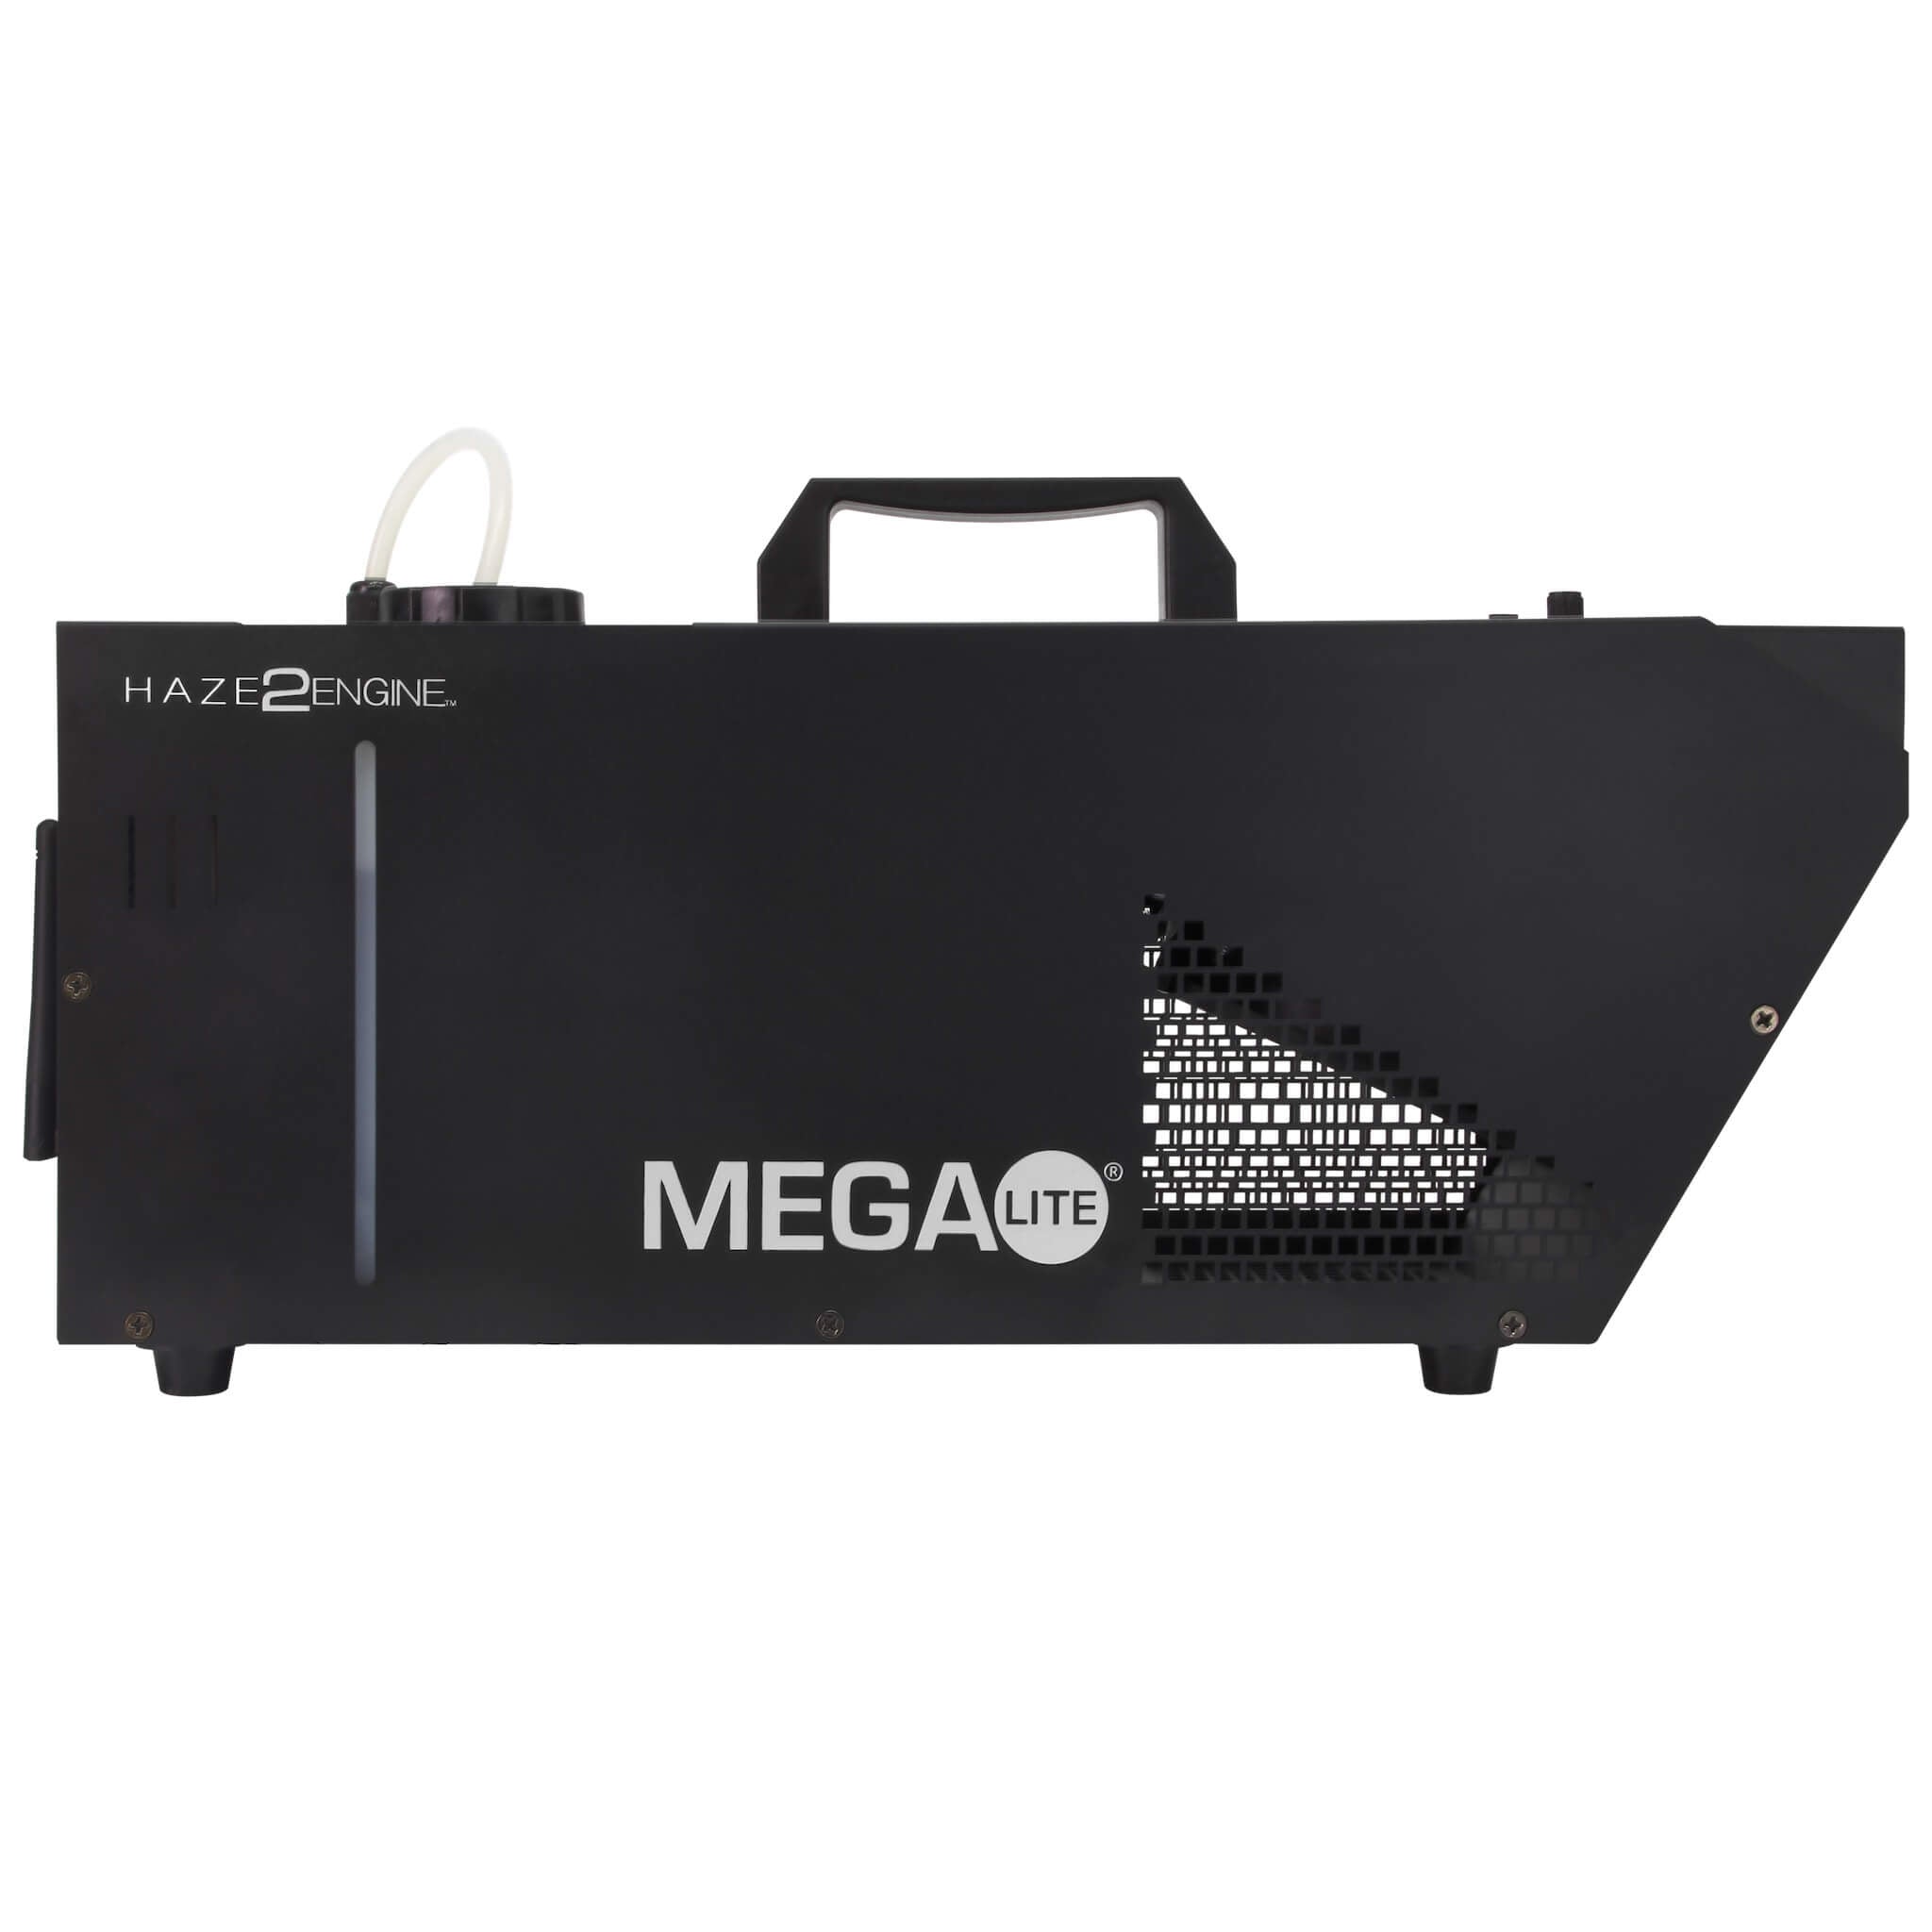 Mega-Lite Haze 2 Engine - 900W Water Based Hazer, side